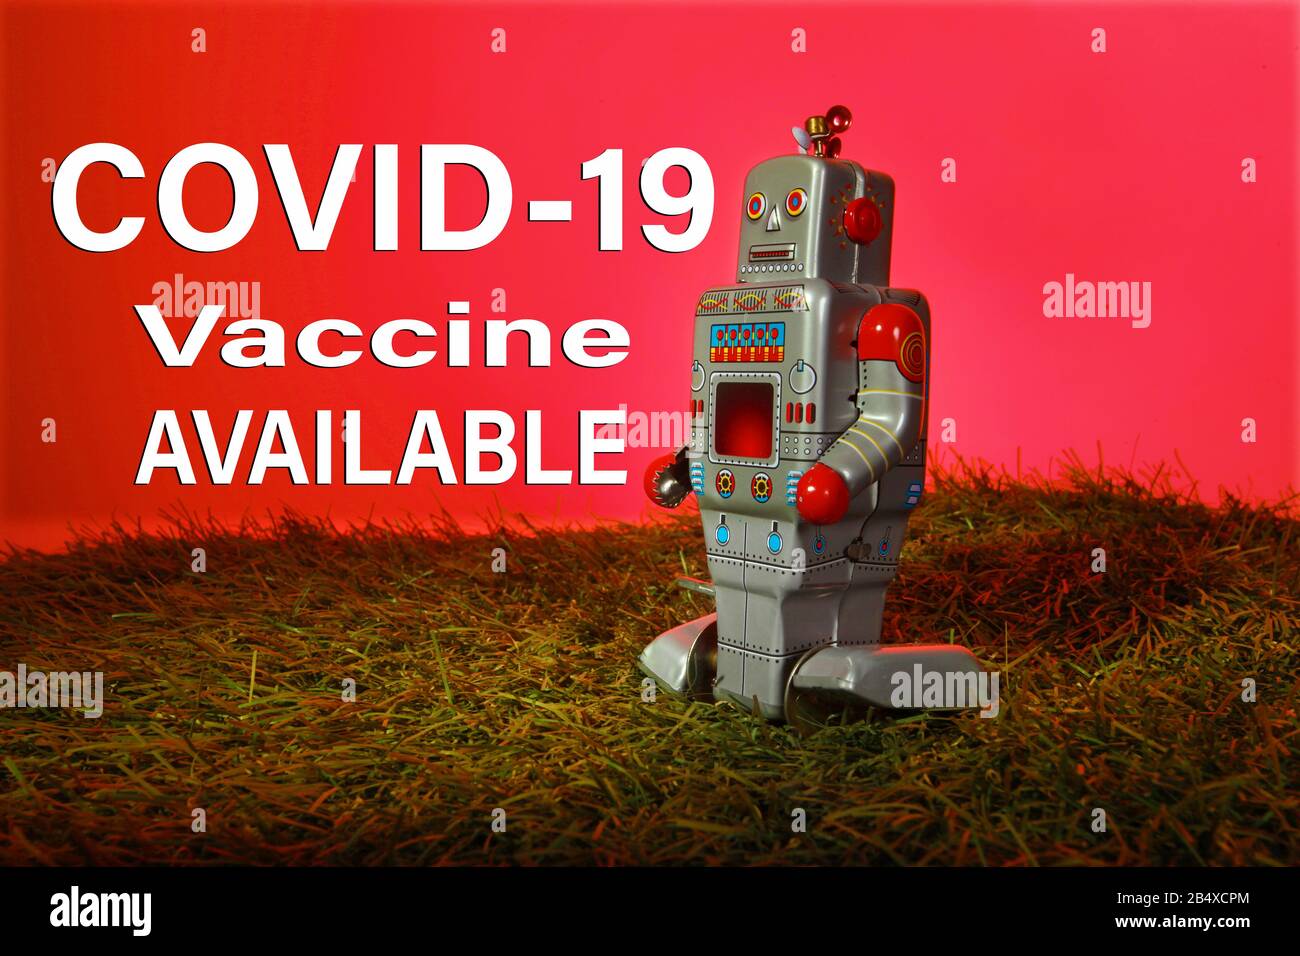 COVID-19 Vaccine available, Coronavirus Stock Photo